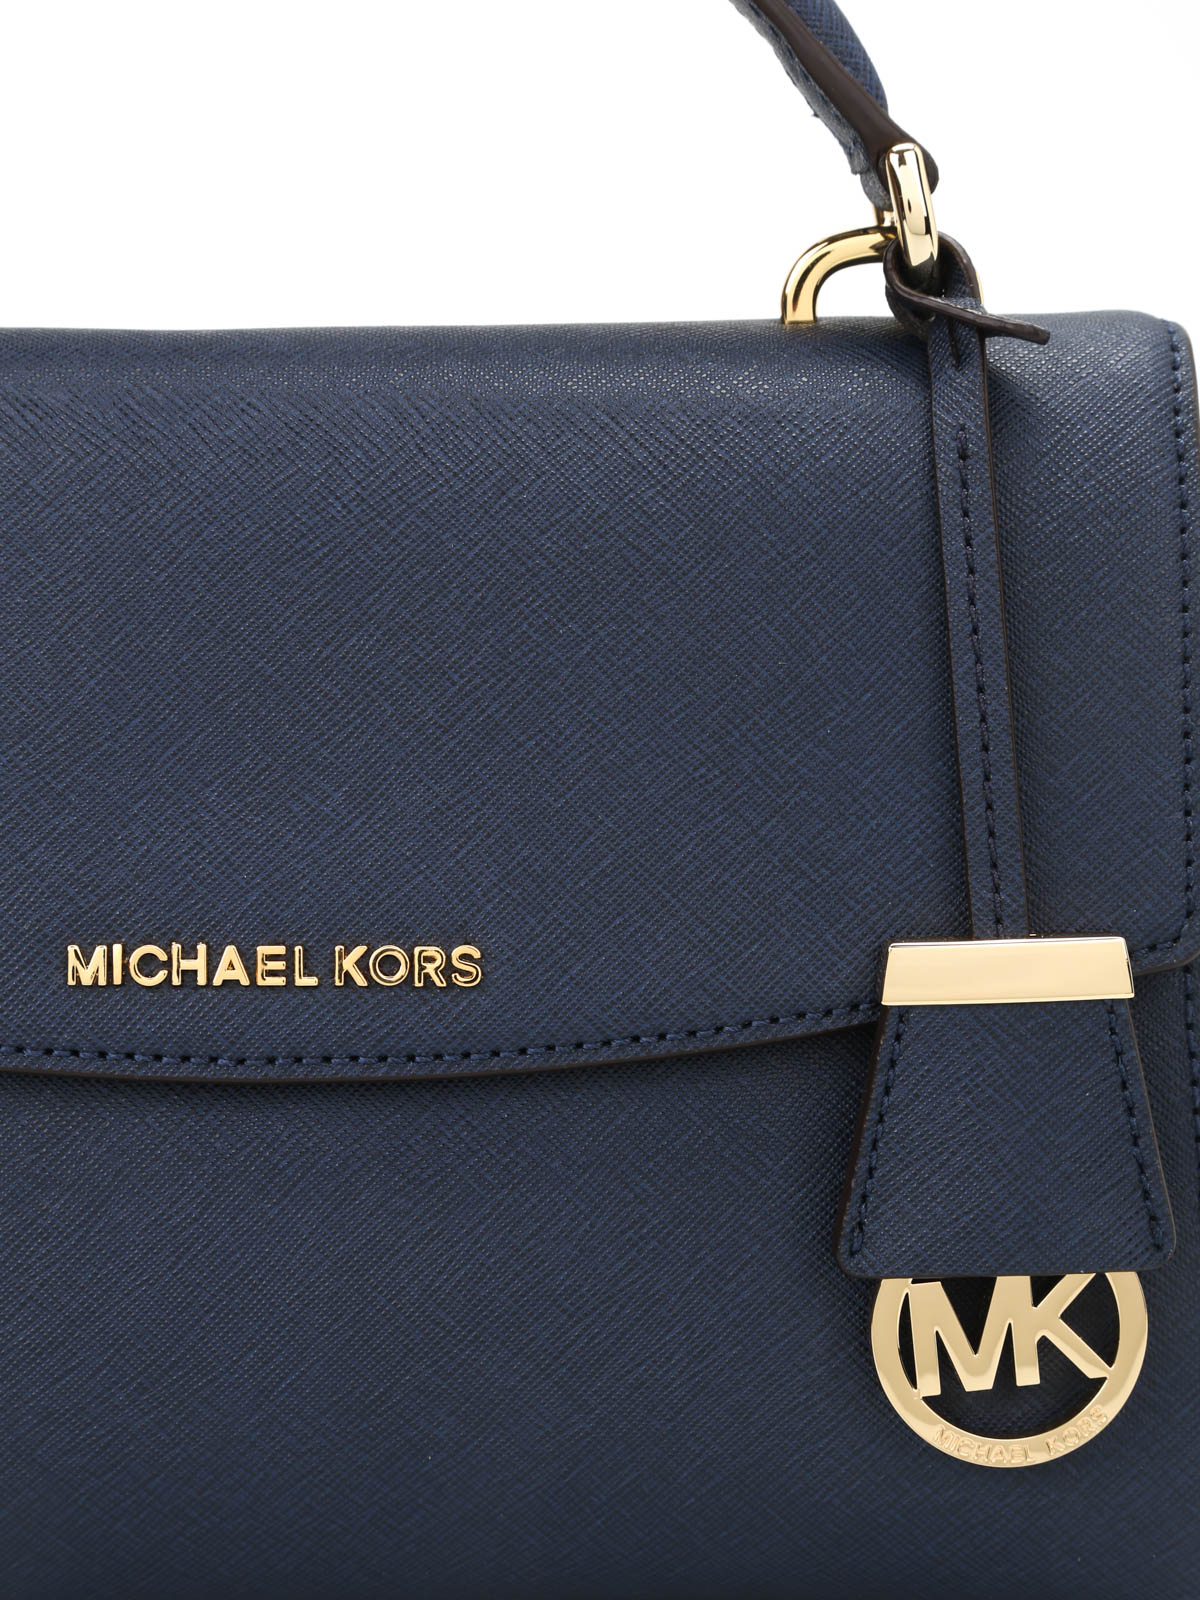 Michael Kors Ava Mini Silver Leather Cross-Body Bag